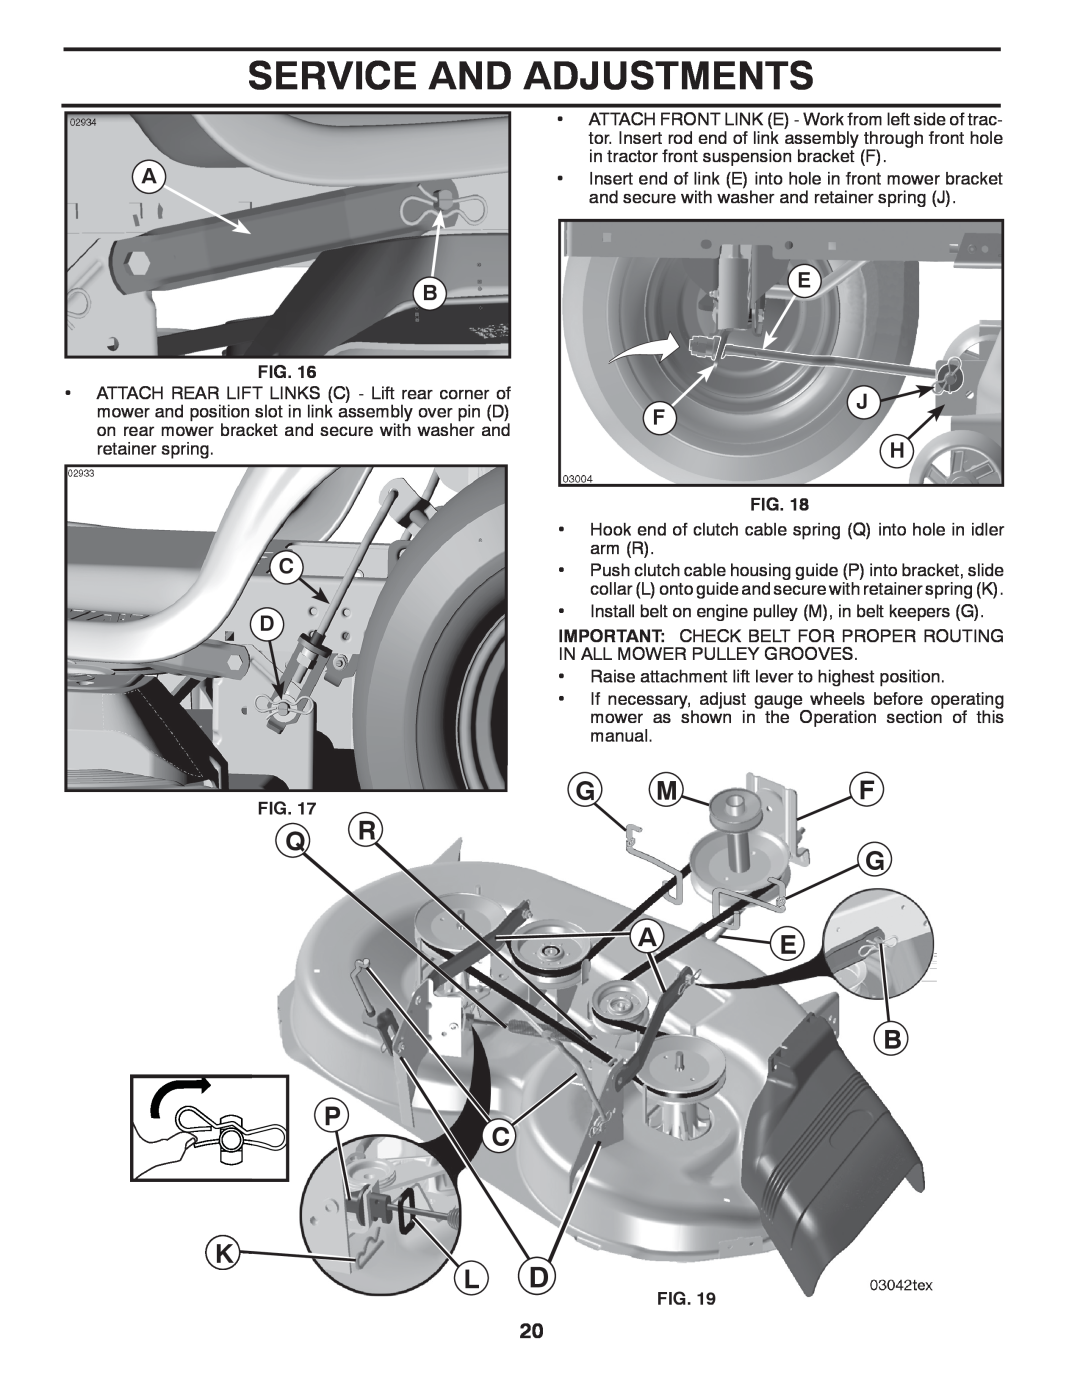 Poulan pb19546lt manual G Mf, A E B C, Service And Adjustments 